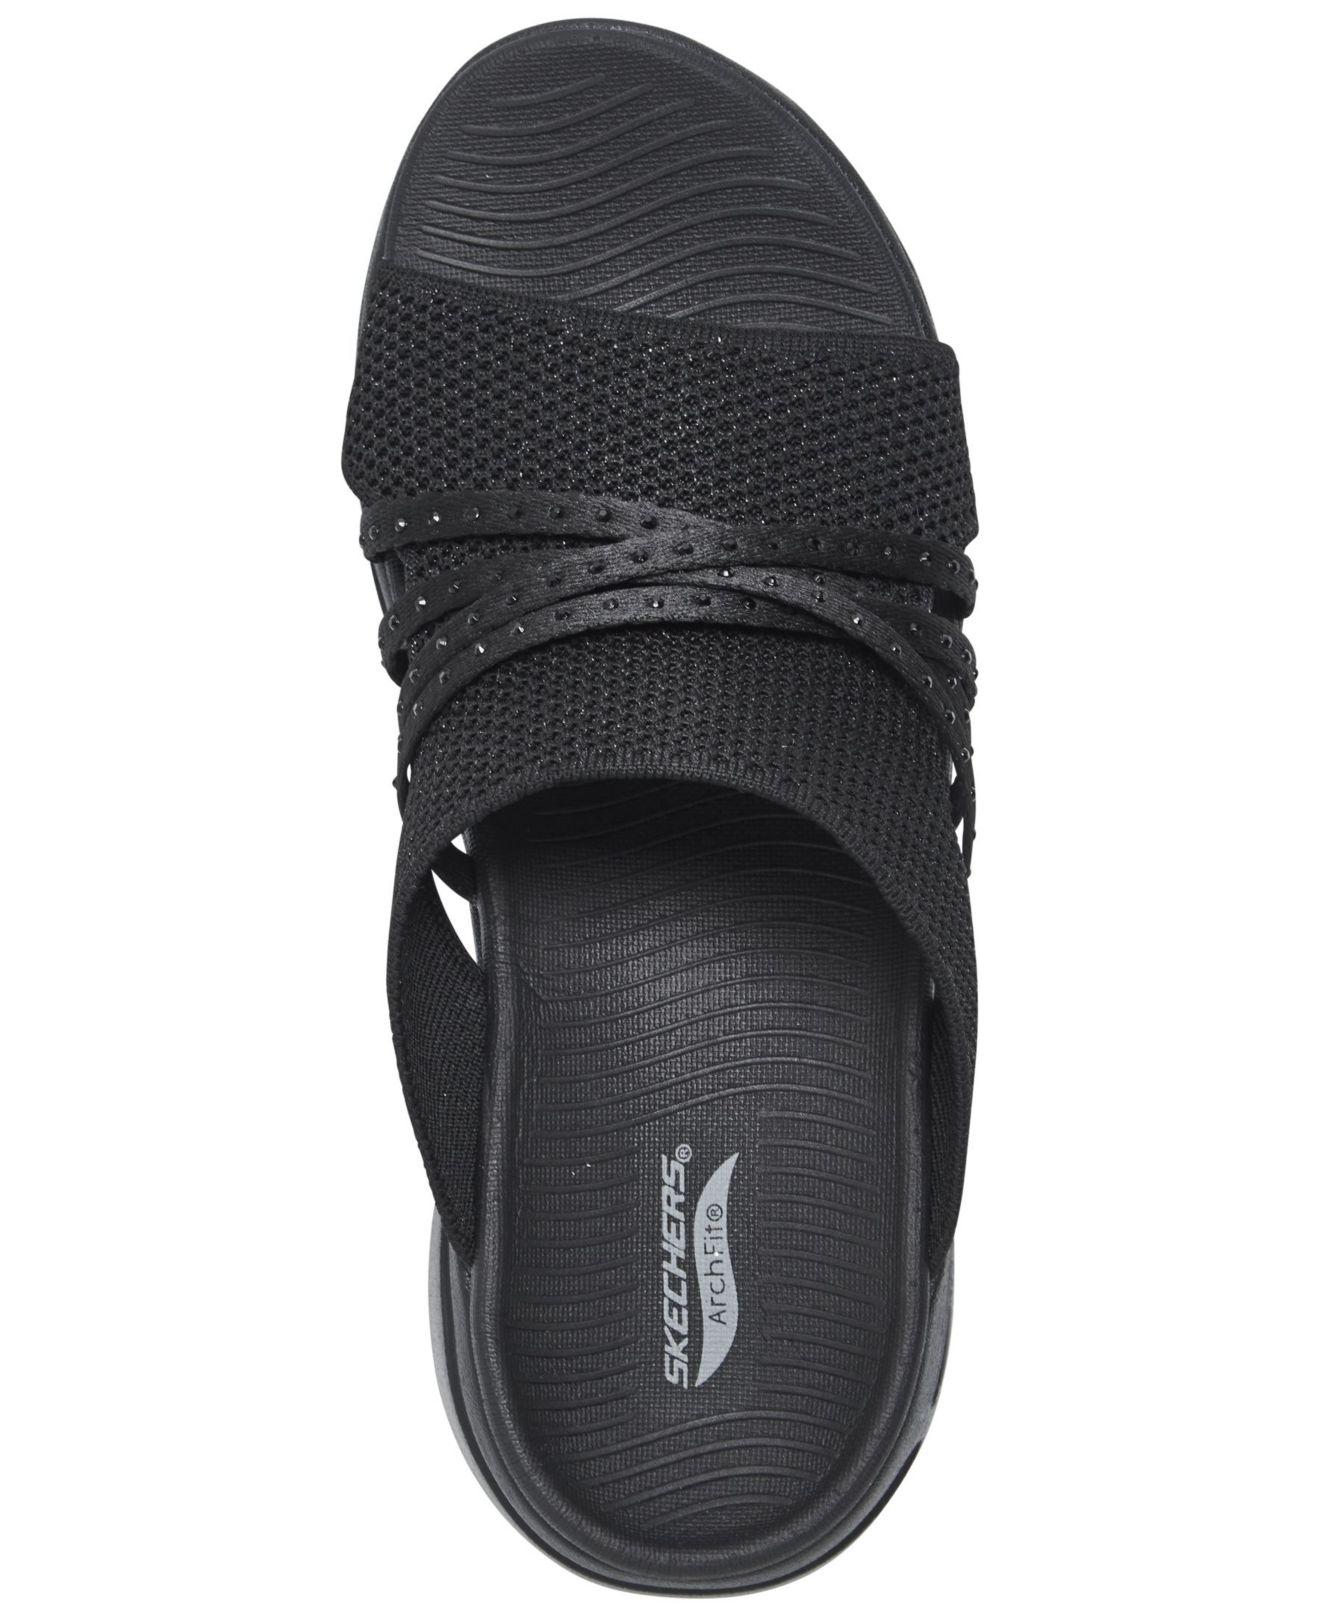 Skechers Go Arch Glisten Slide Sandals From Finish Line Black | Lyst